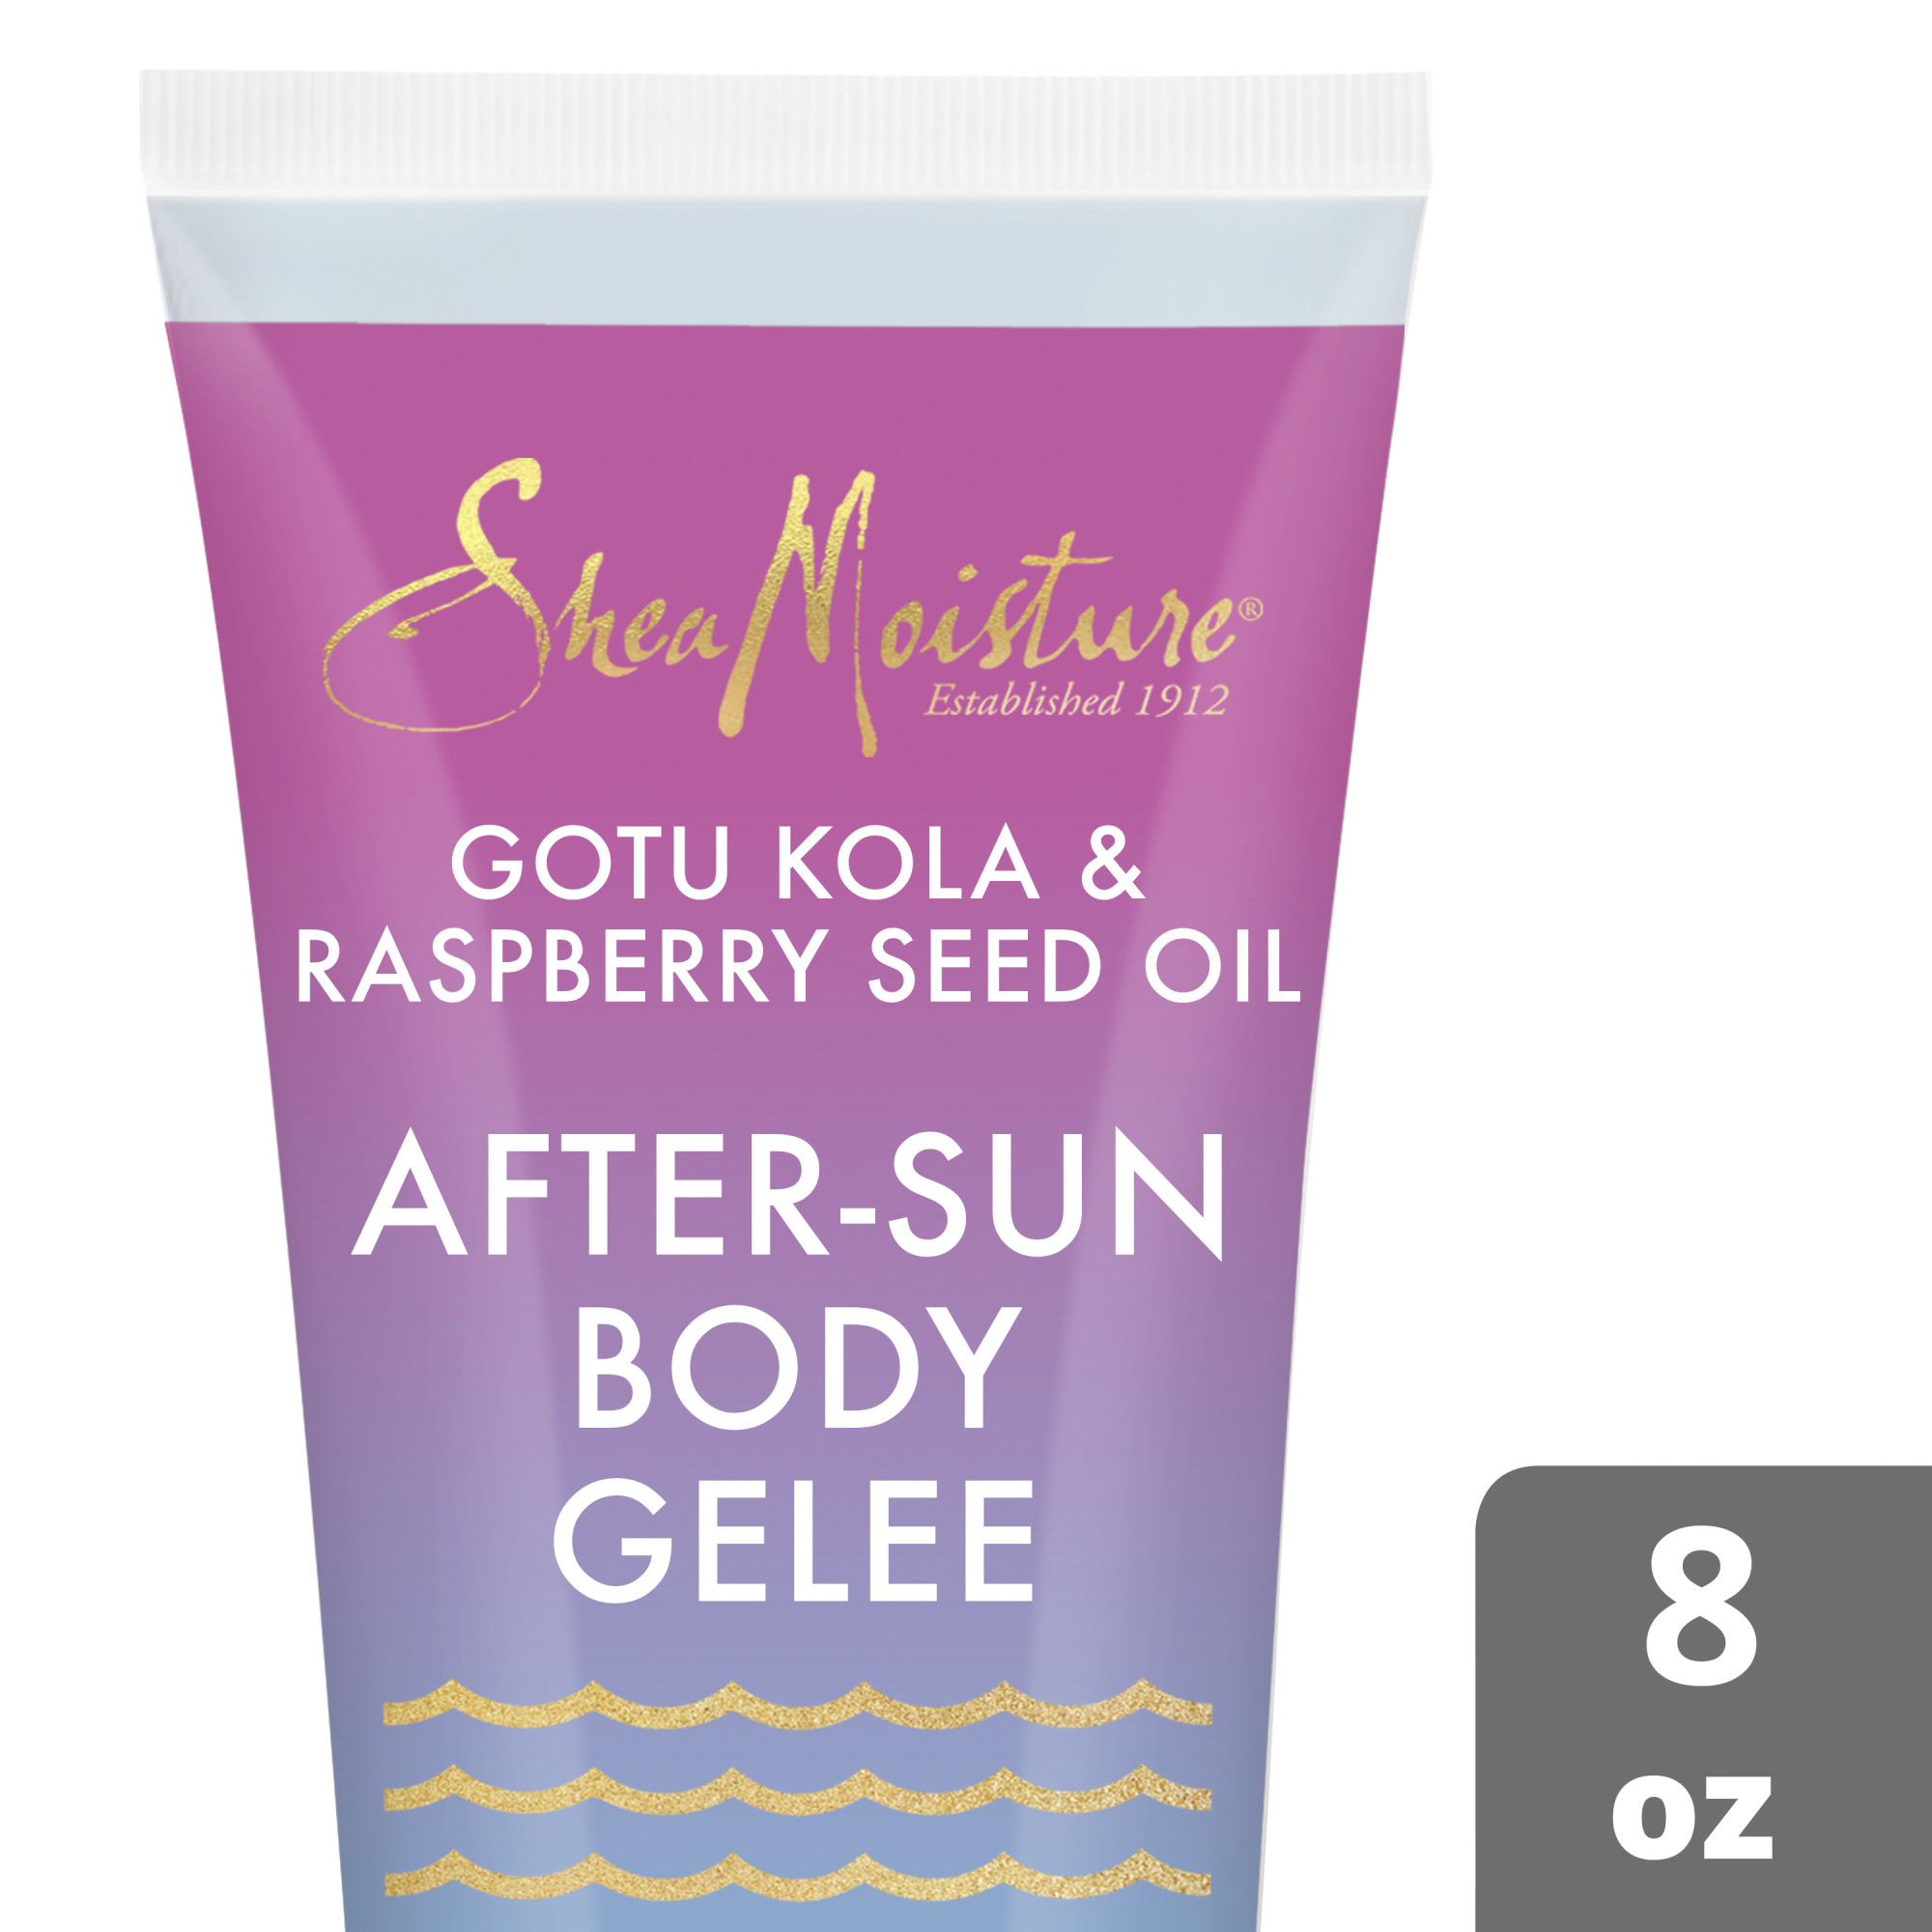 SheaMoisture Gotu Kola & Red Raspberry Oil Mineral After-Sun Body Gelee, 8 oz - image 1 of 4